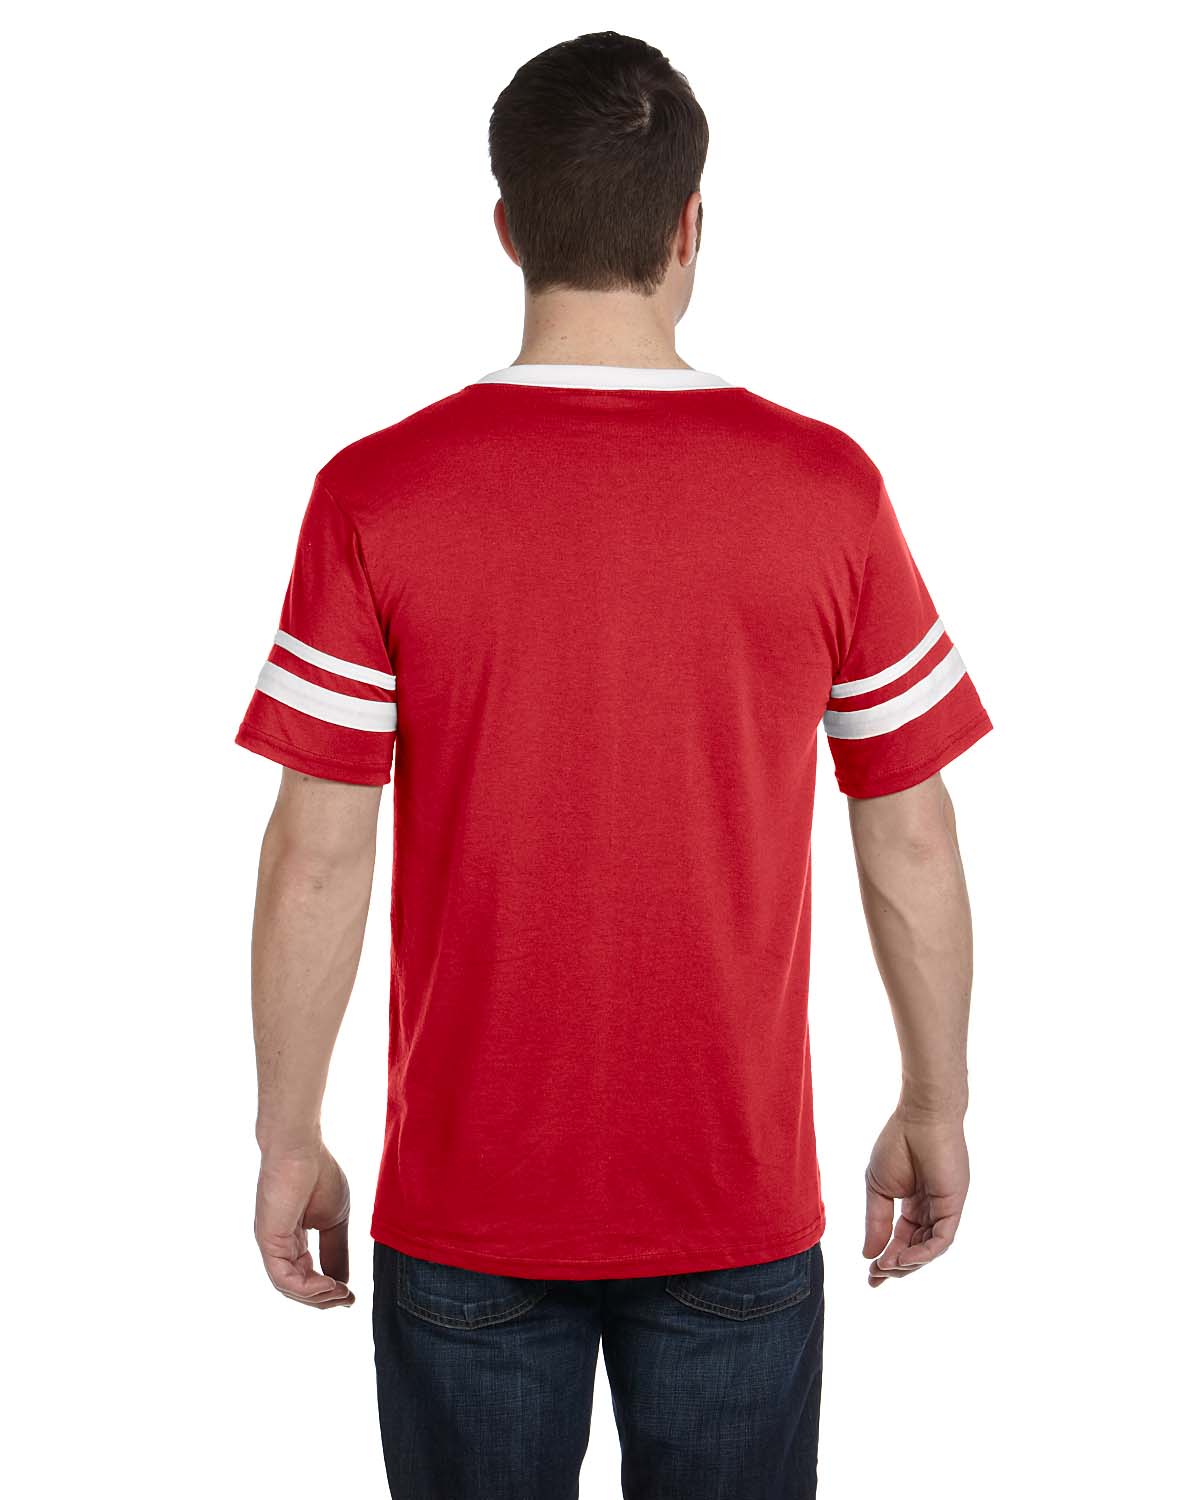 Augusta Sportswear Baseball Sleeve Stripe Jersey V-neck T-Shirt S-2XL M-360  | eBay